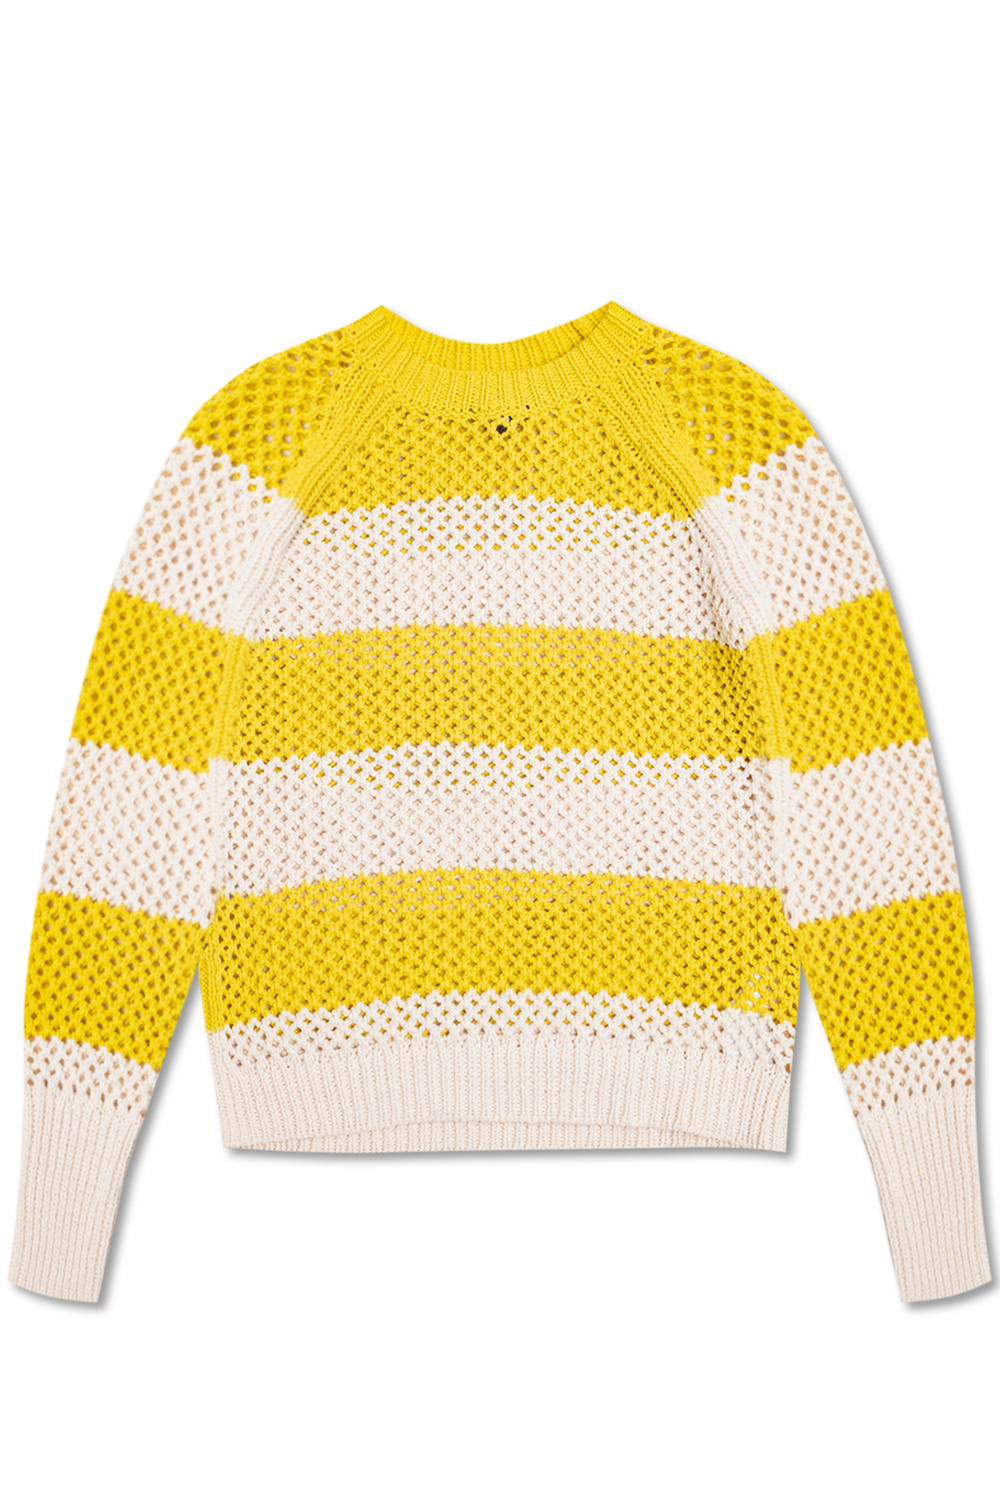 AllSaints ‘Lou’ Alexander sweater